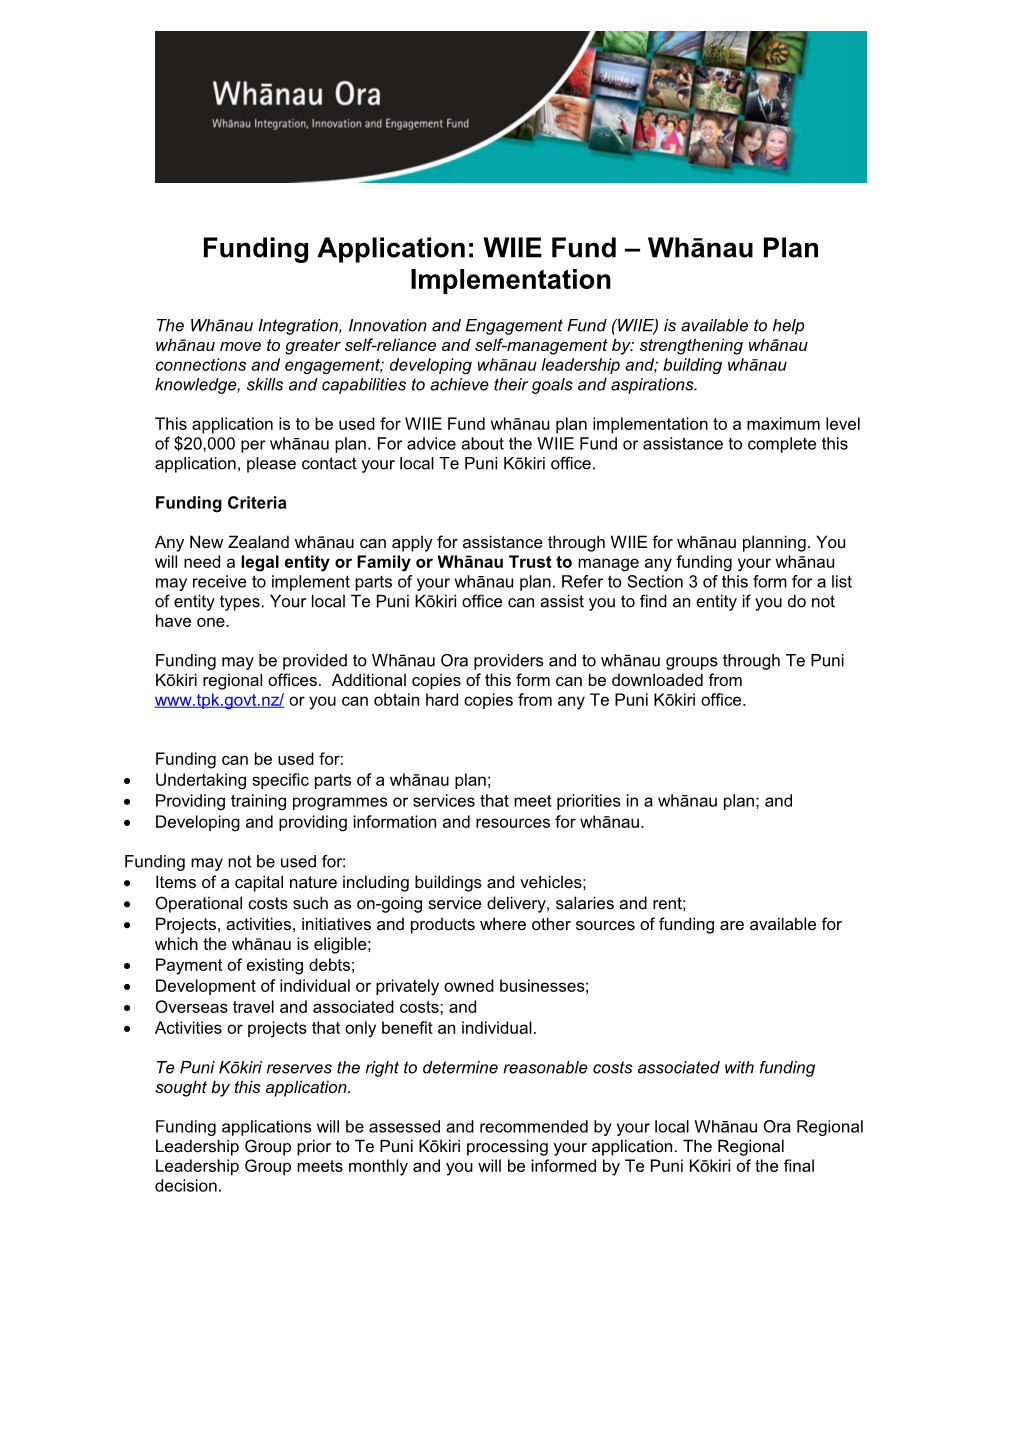 Funding Application: WIIE Fund - Whanau Plan Implementation